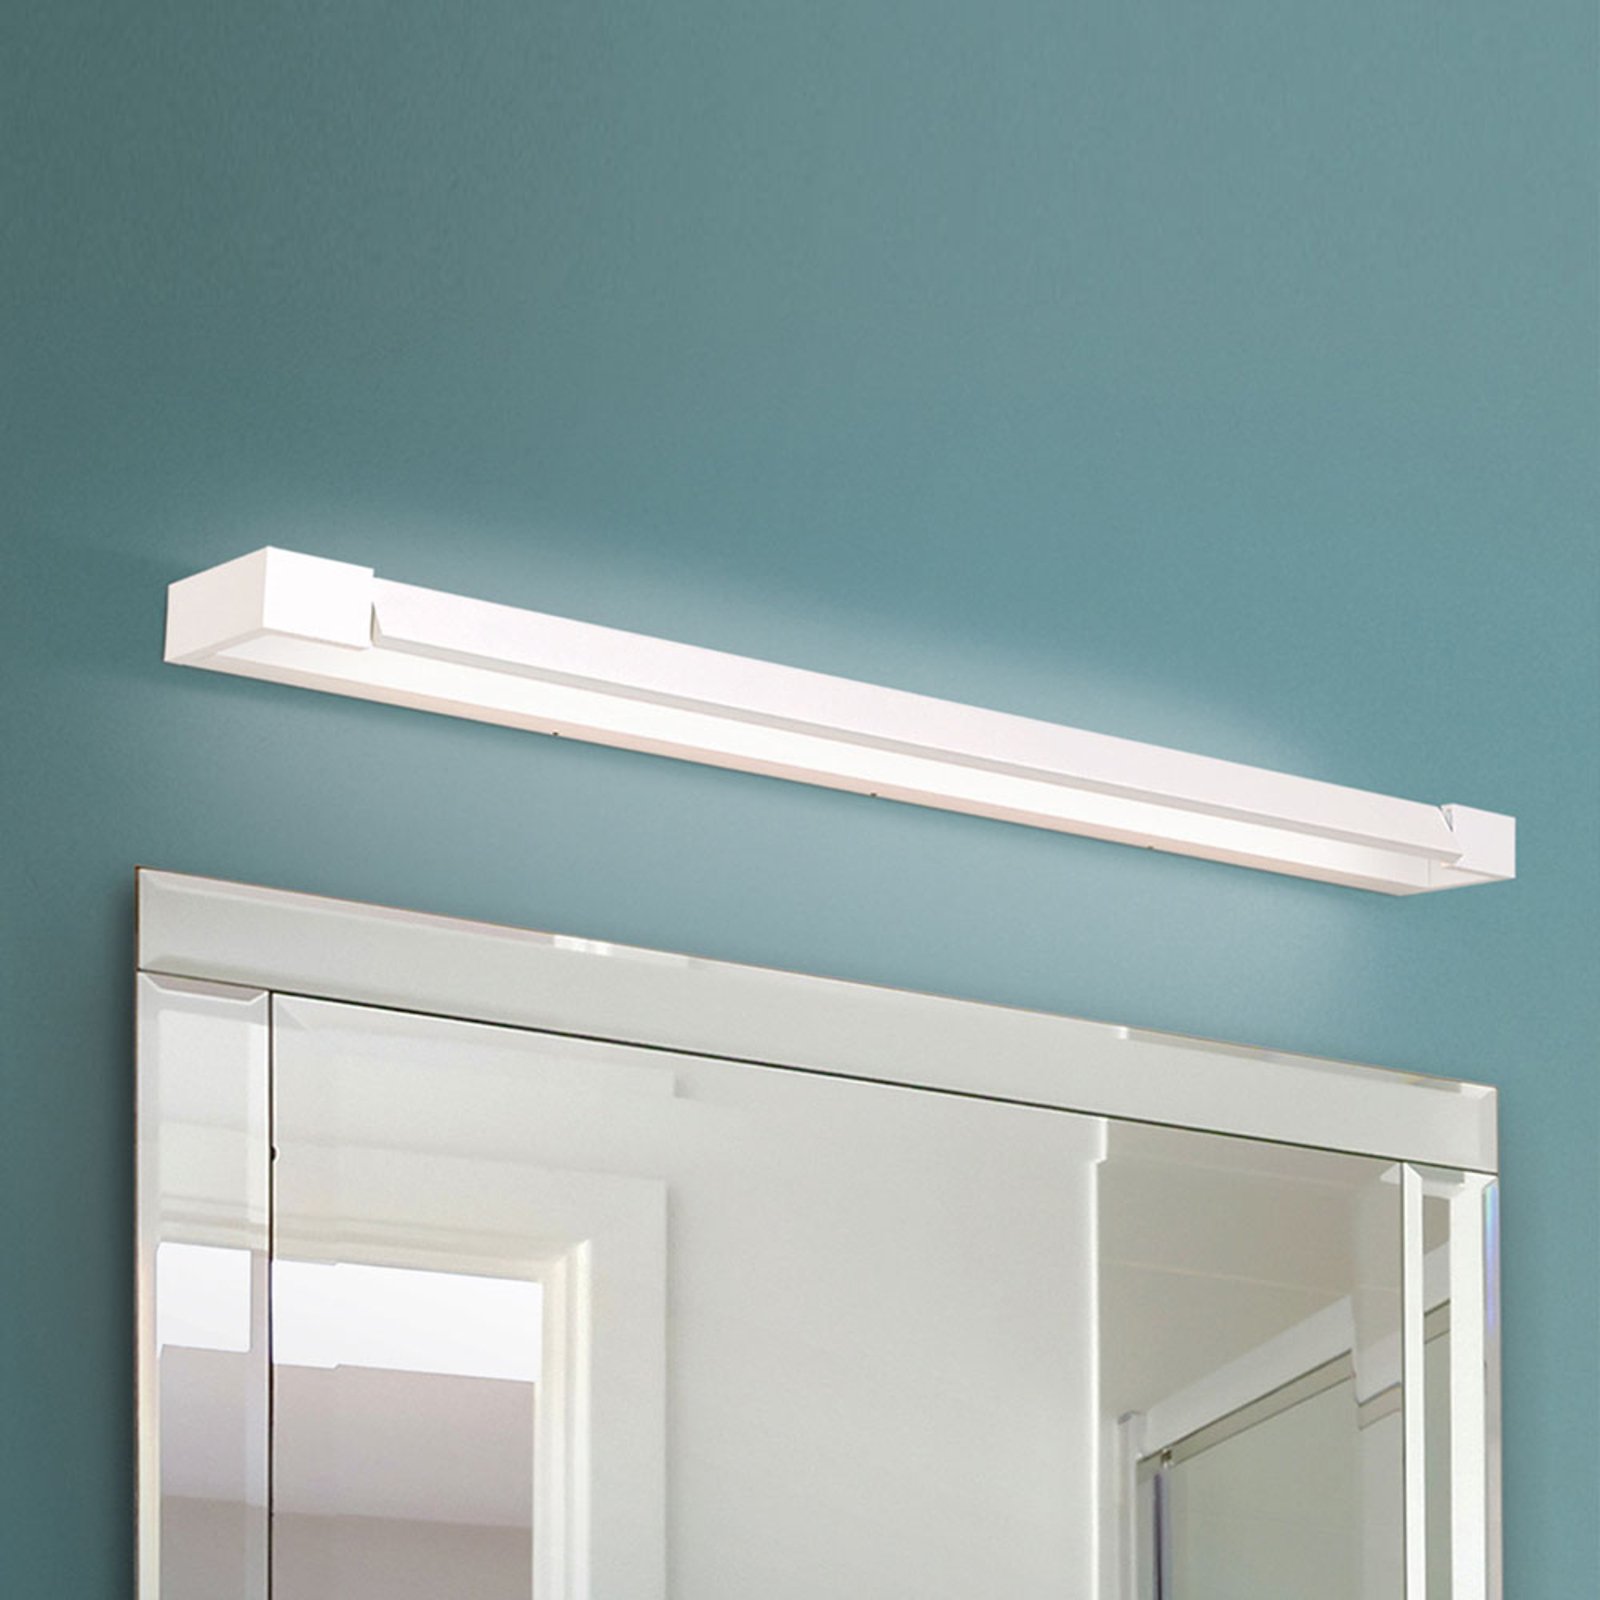 LED-spegellampa Marilyn, vit, lutbar 90 cm